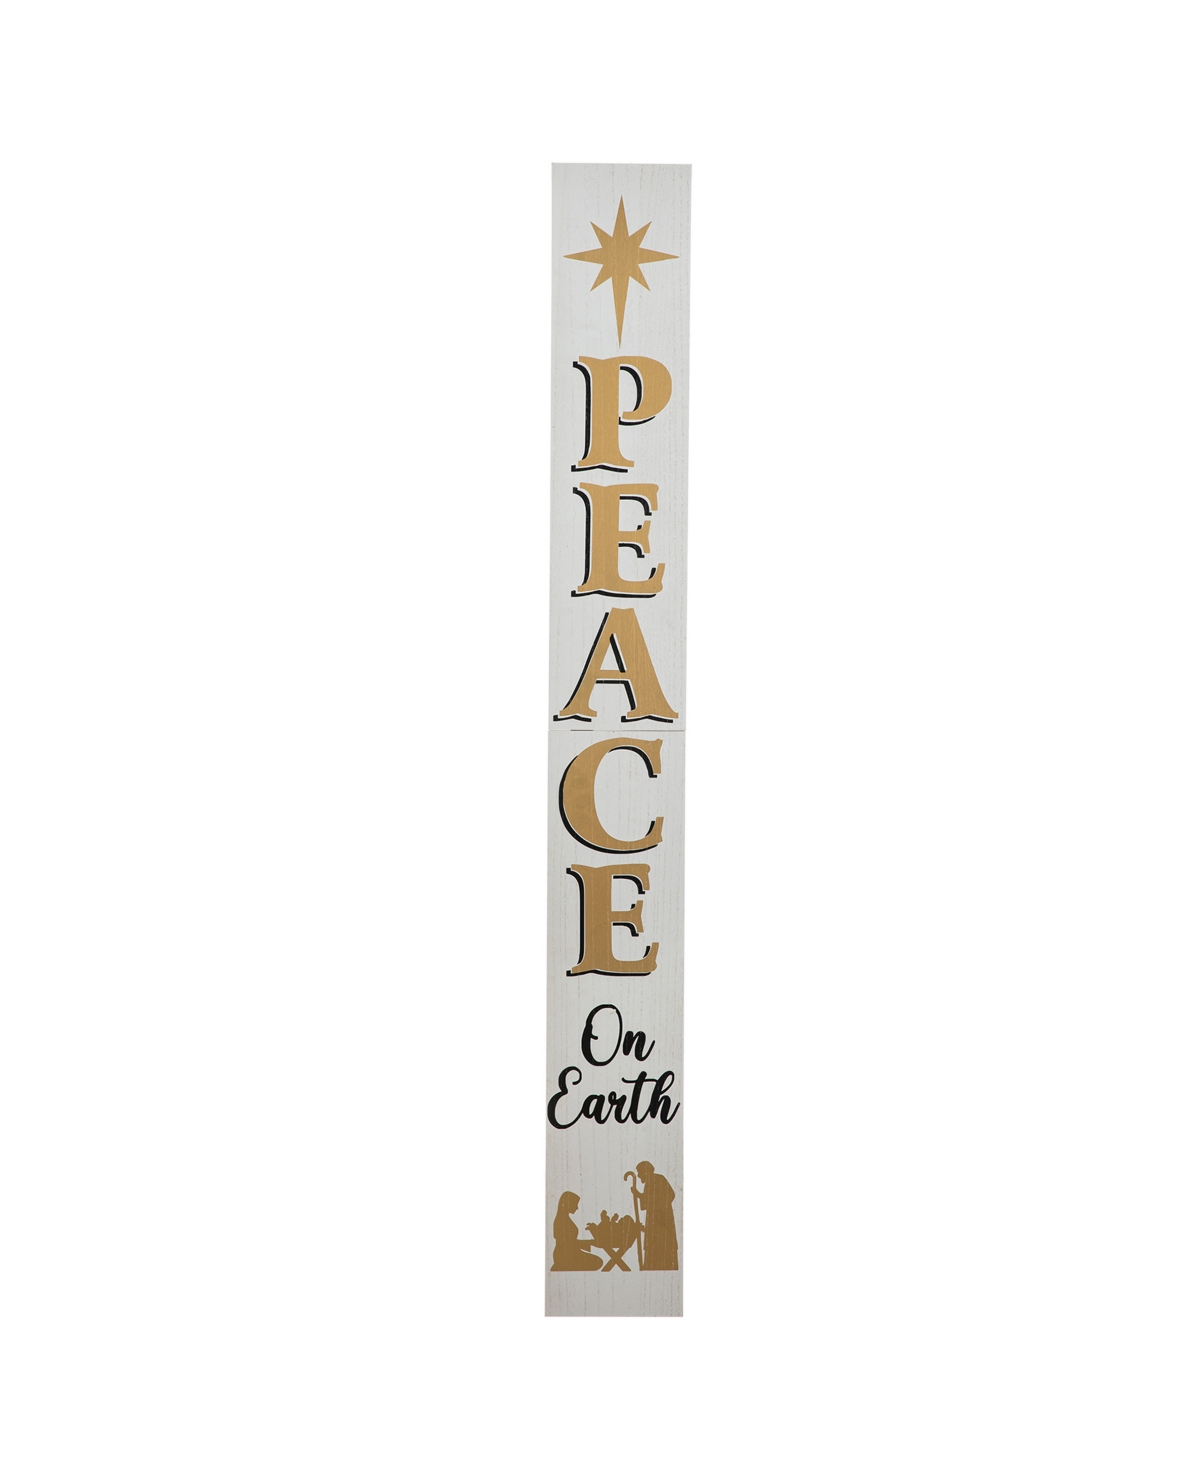 60" Wooden Nativity Peace Porch Sign - Multi